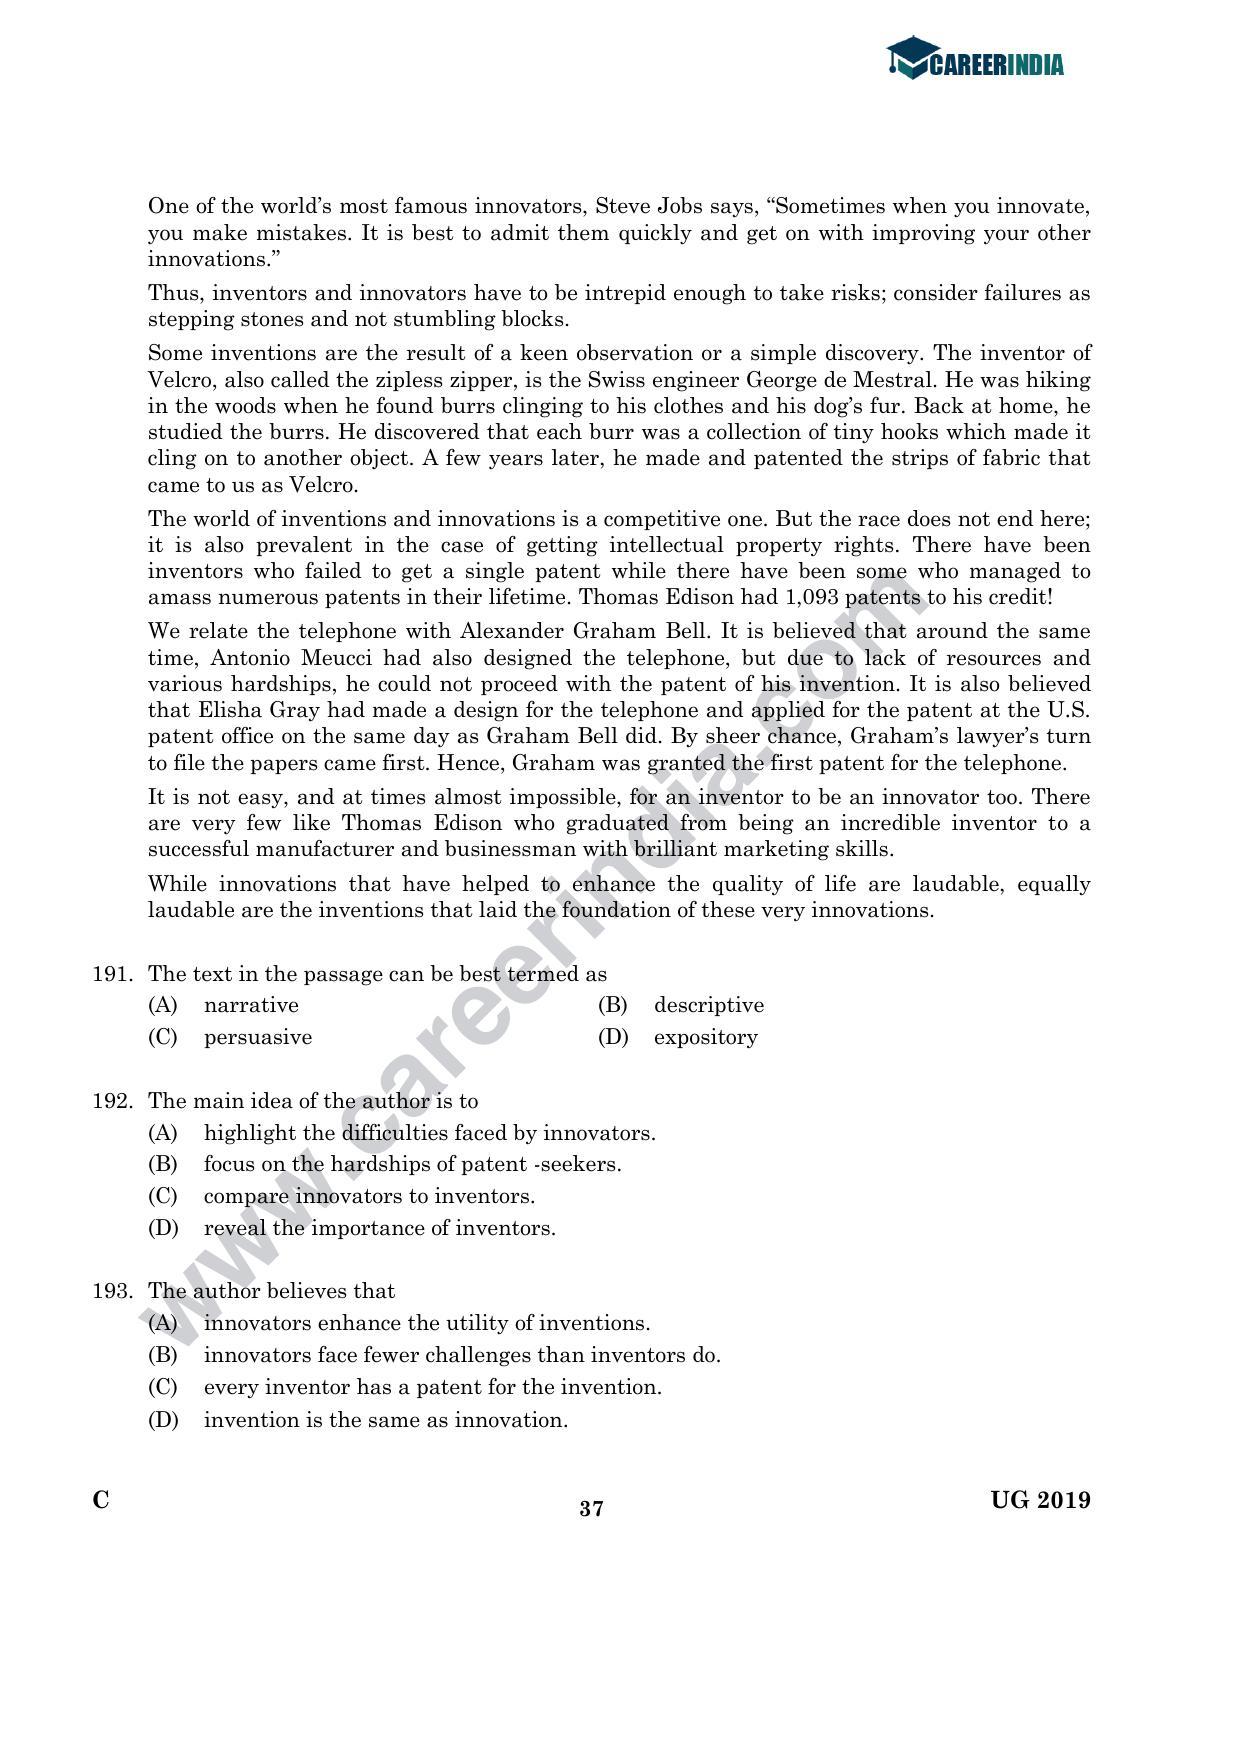 CLAT 2019 UG Legal-Aptitude Question Paper - Page 36